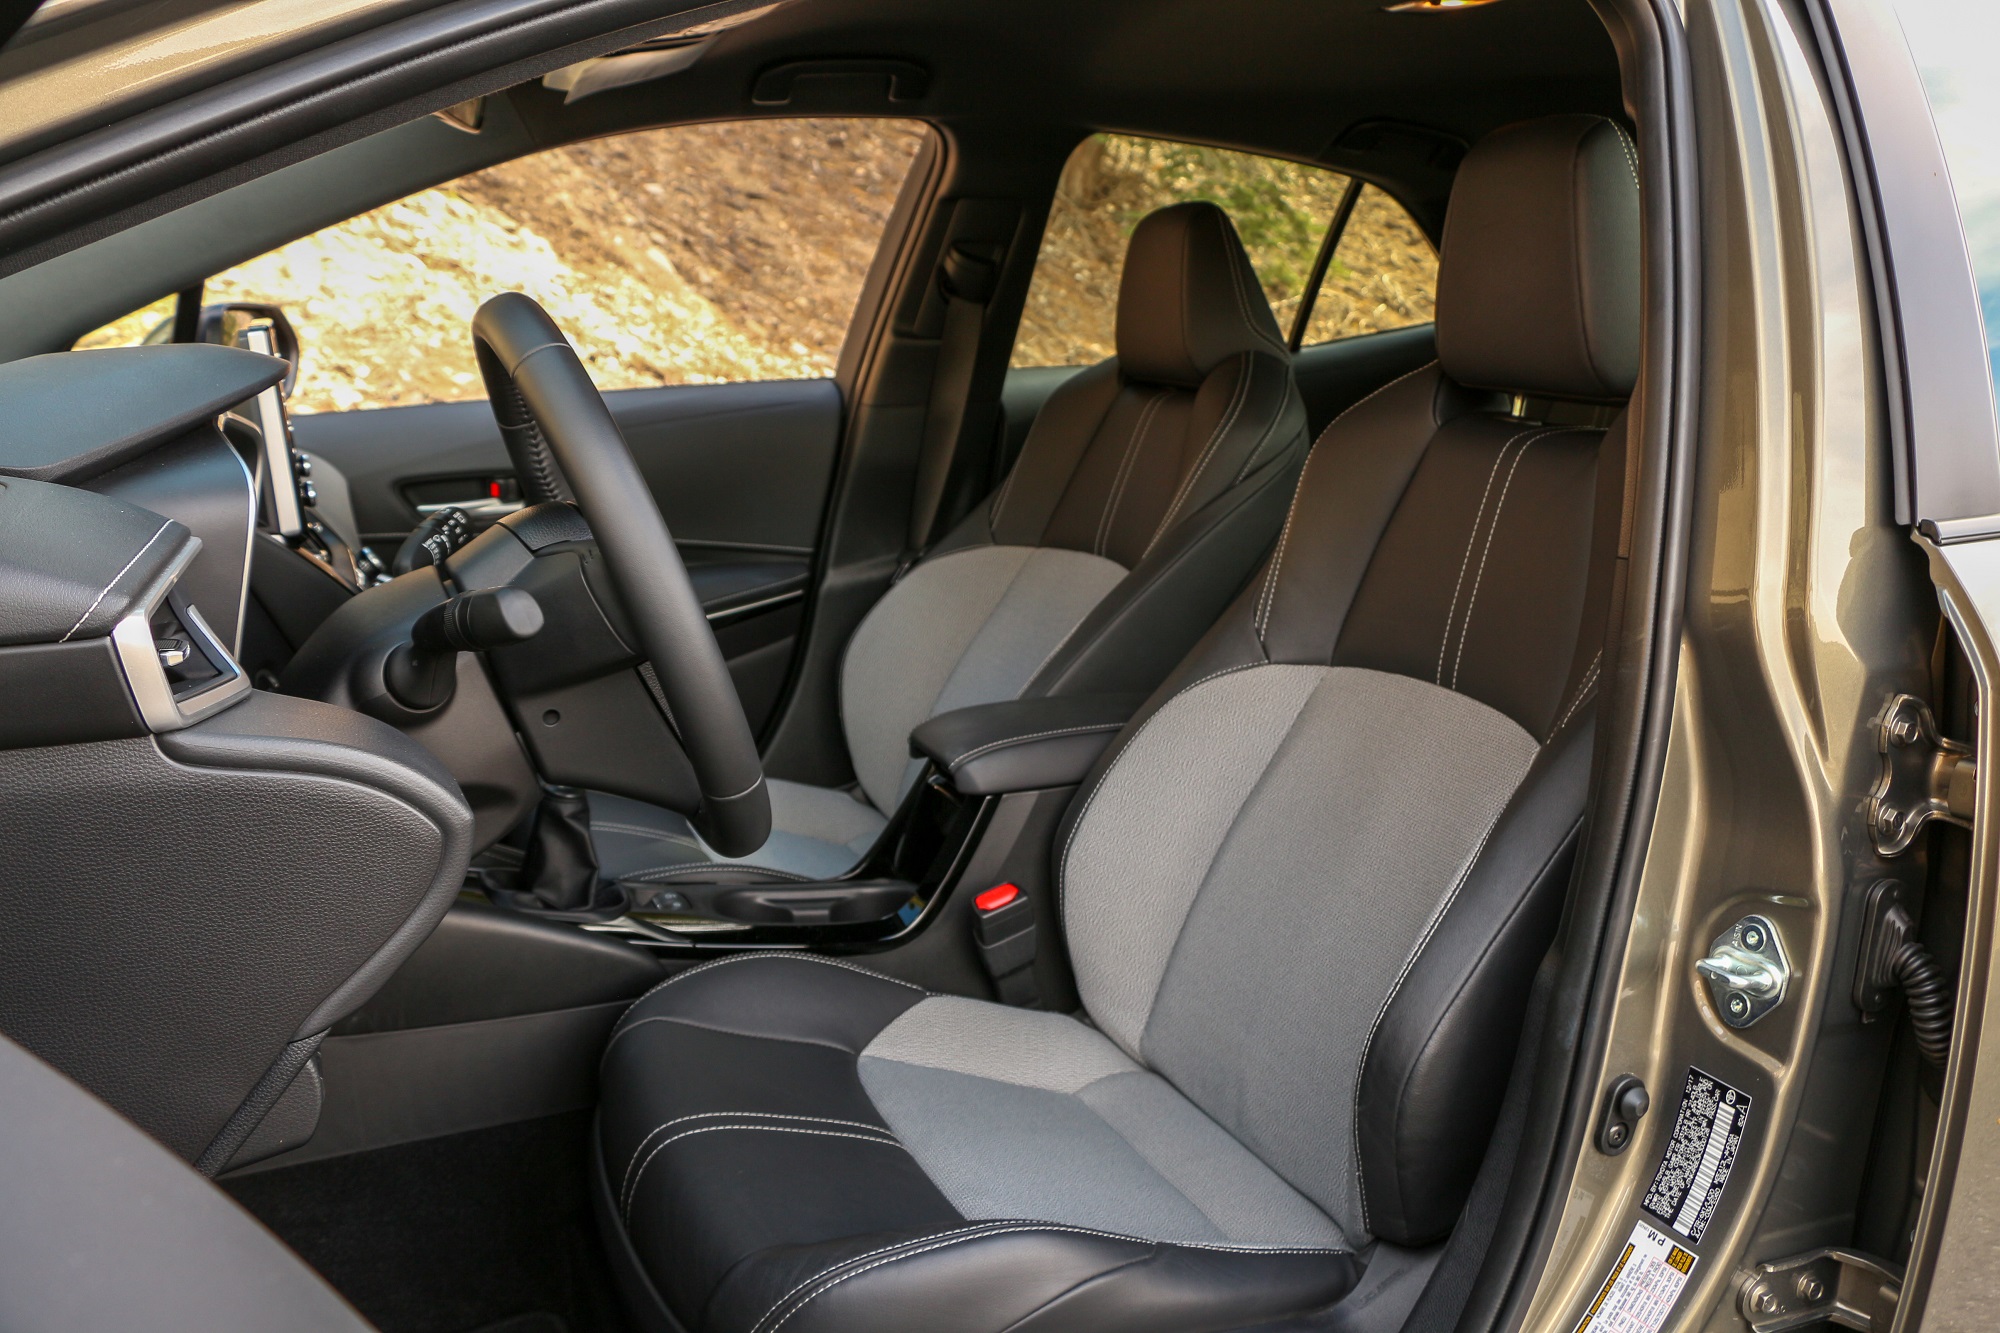 2019 Toyota Corolla Hatchback SE XSE Manual Transmission Interior Exterior Colors Bronze Oxide Engine EnTune Features Review News Comparison Honda Civic Sport Mazda3 Scionlife.com